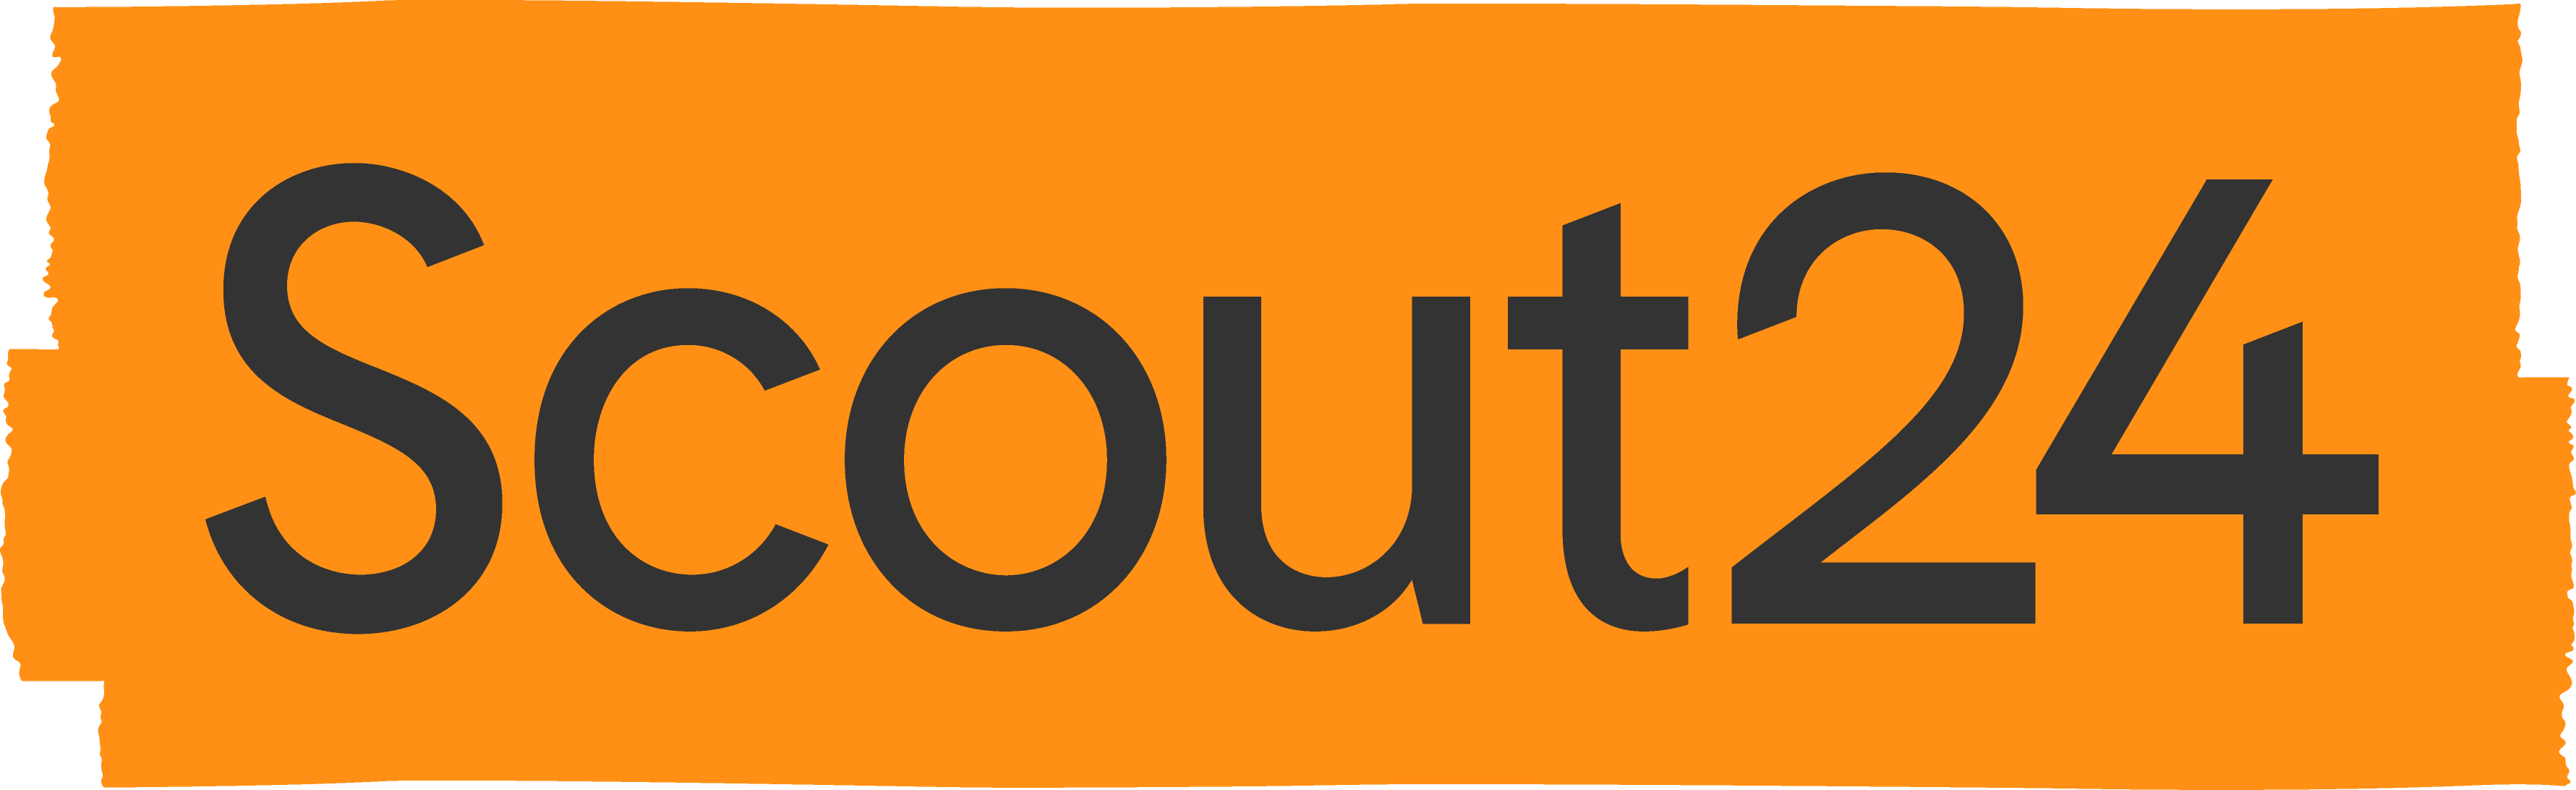 Scout24-Logo-image